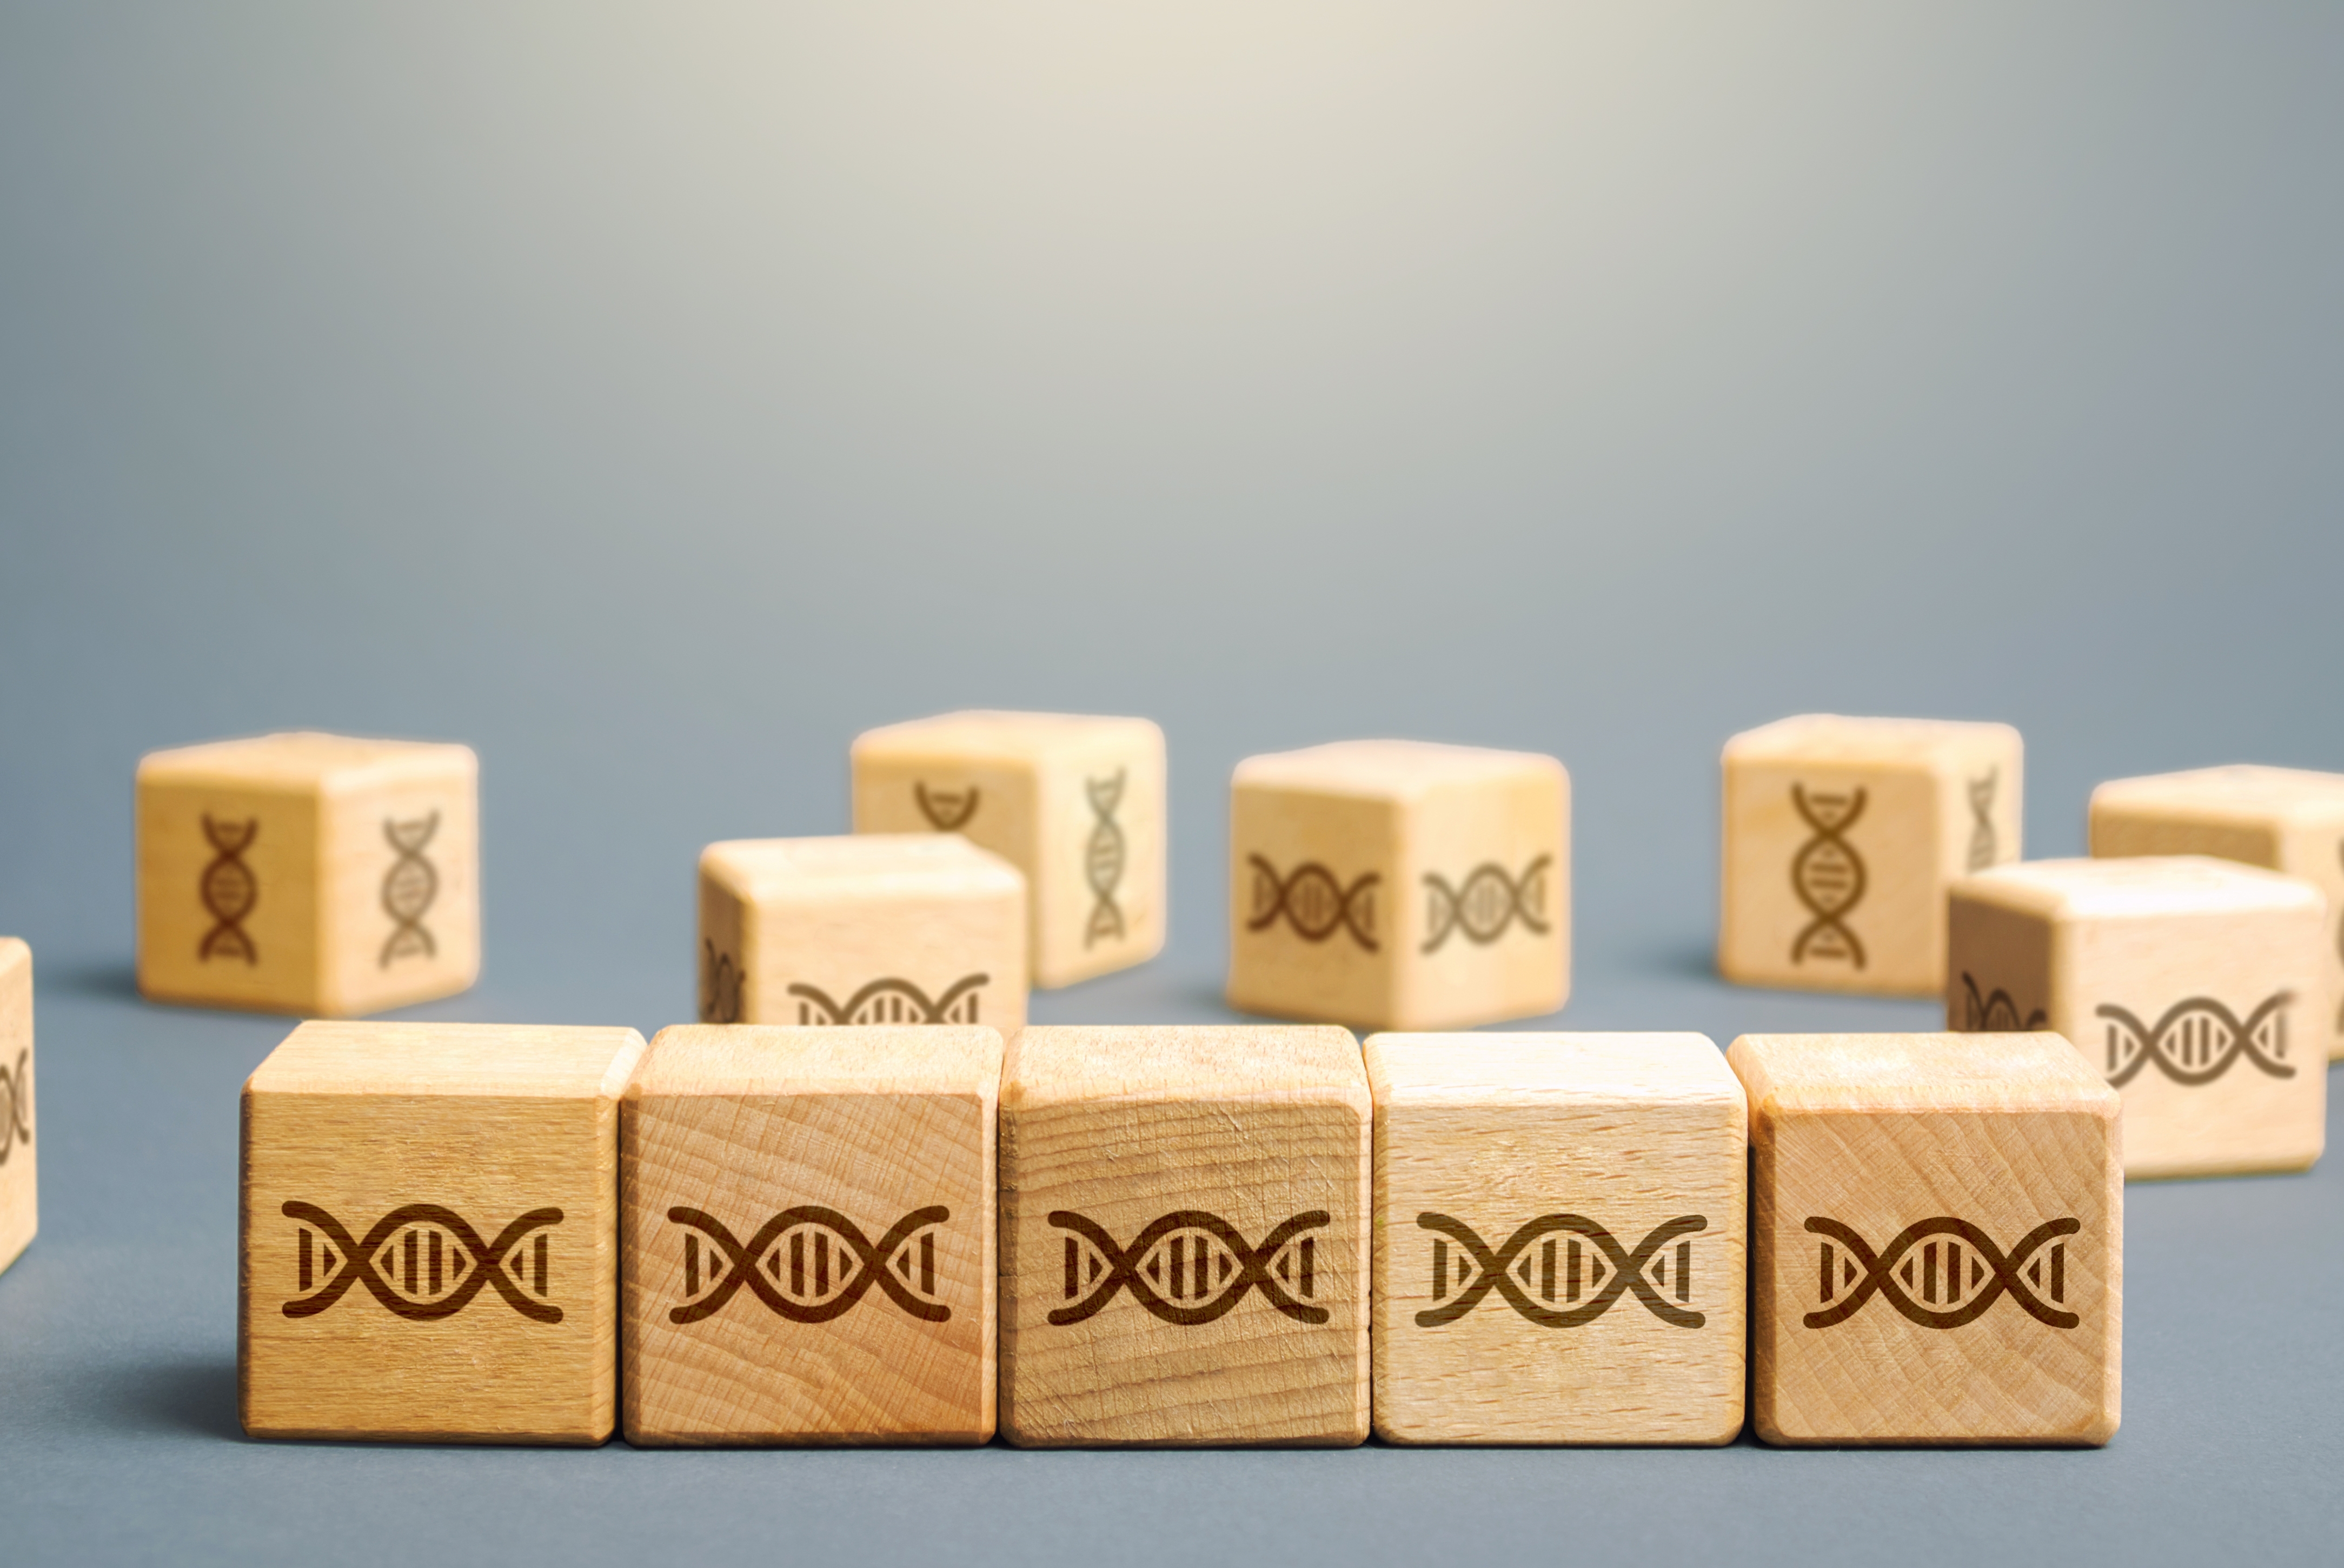 Image of DNA chromosomes on wooden blocks. By Andrii Yalansky via Shutterstock